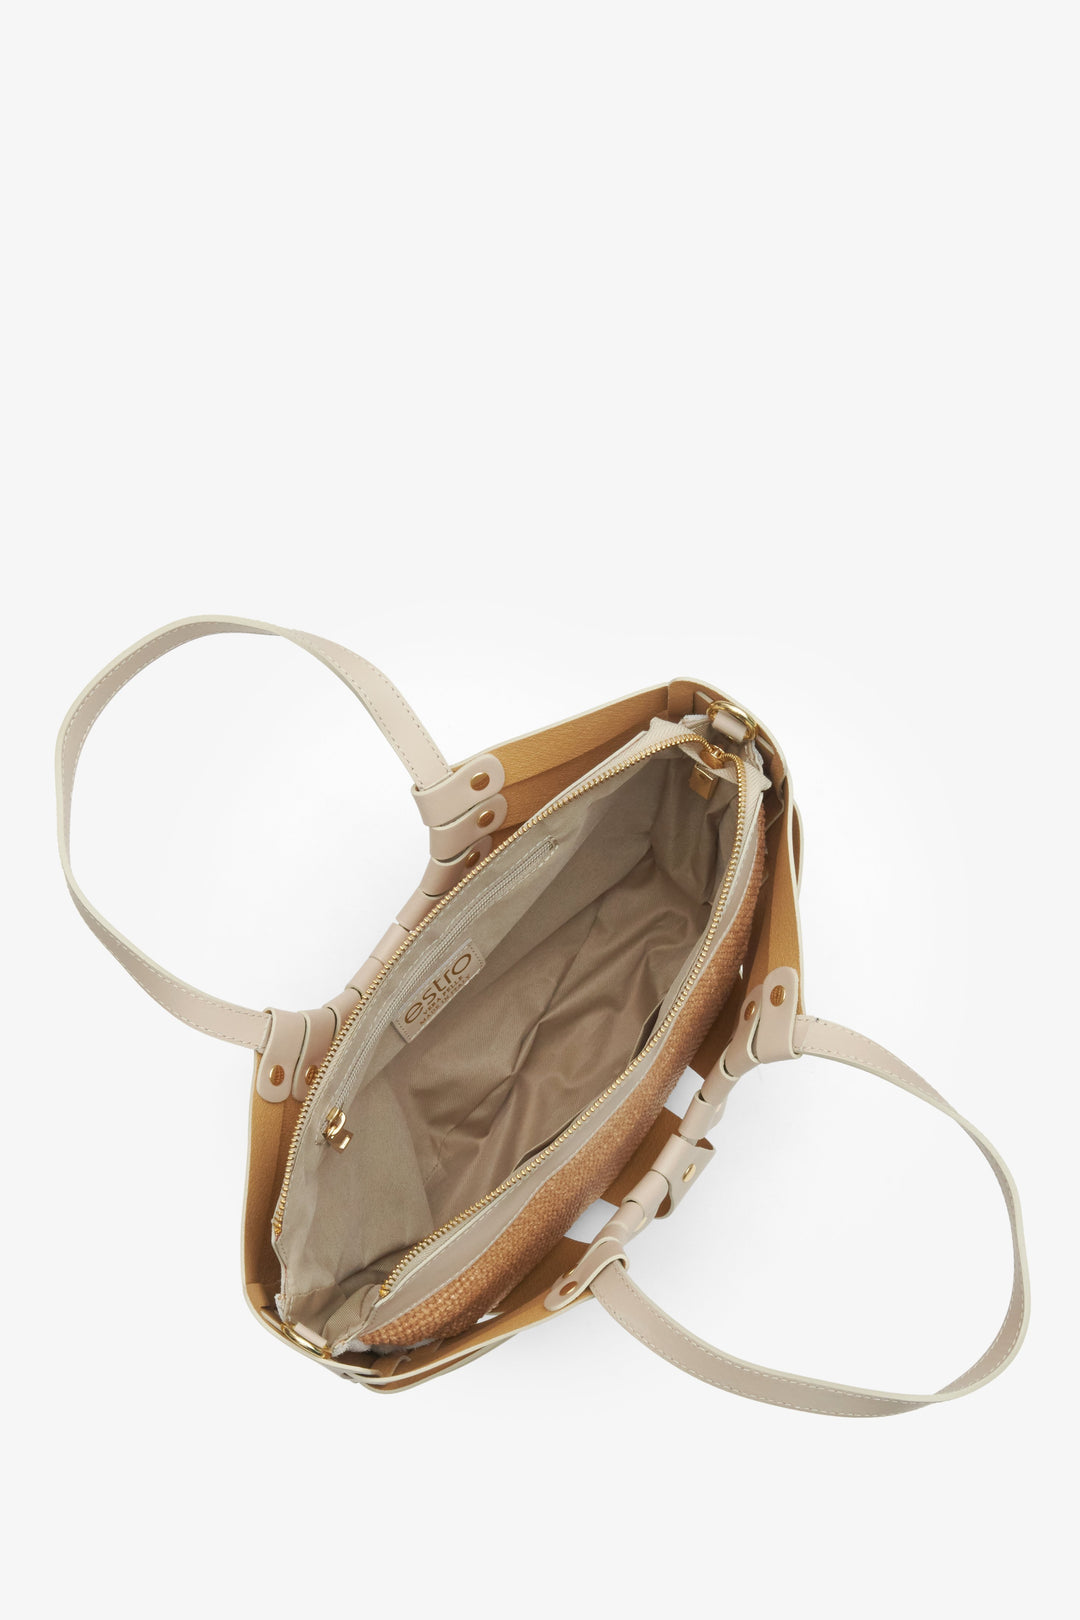 Interior presentation of the Estro beige leather women's basket handbag.